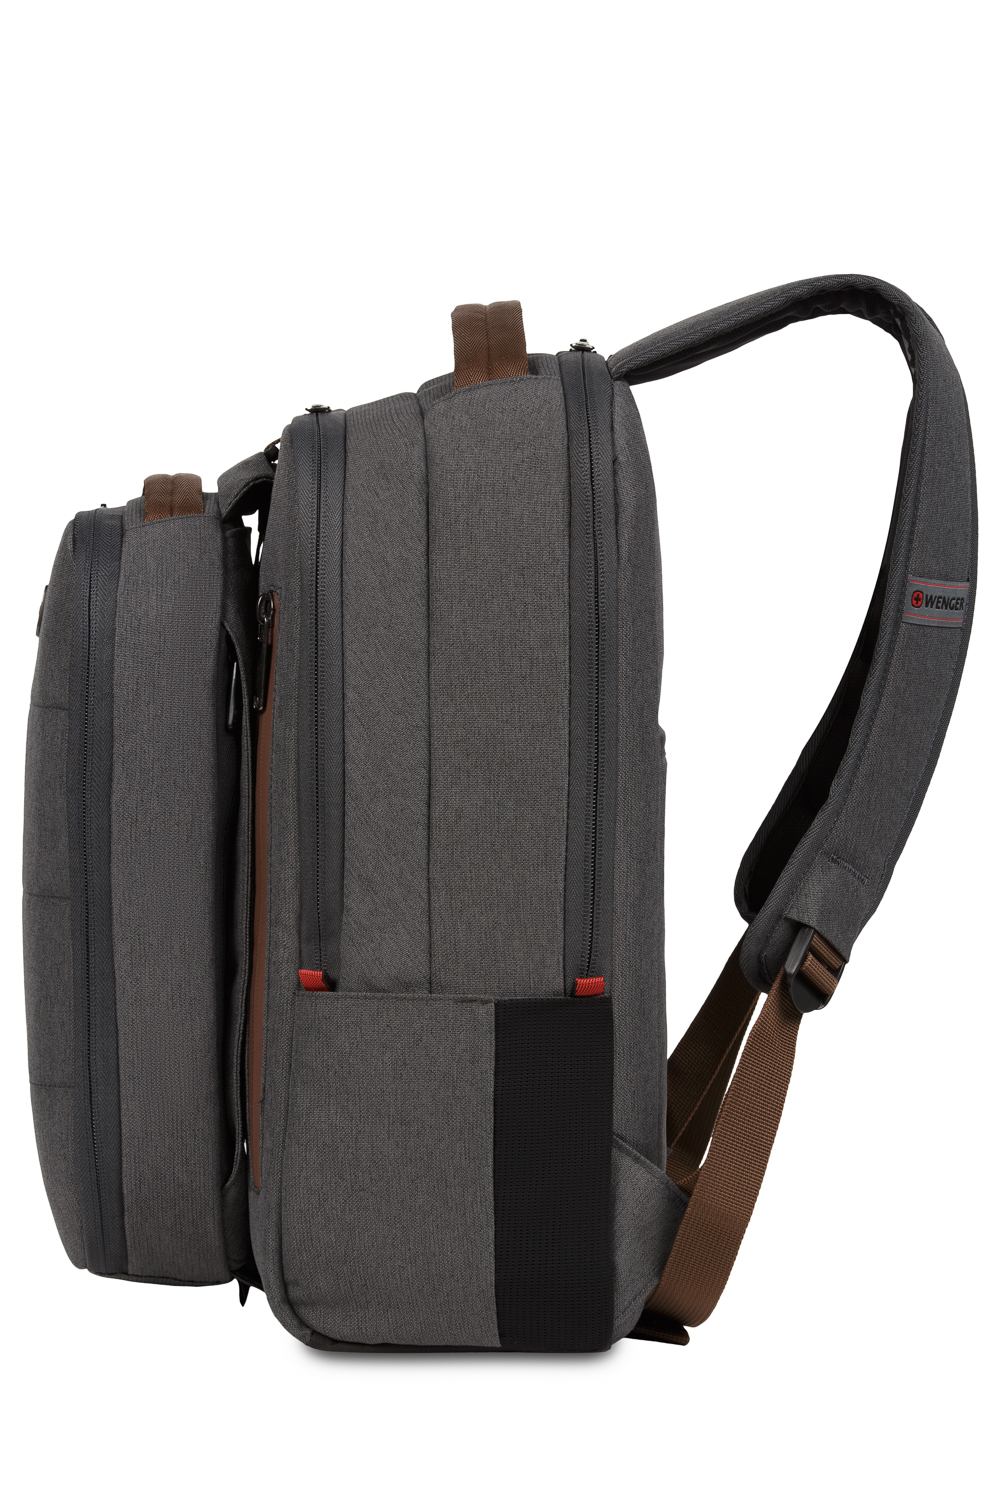 Wenger City Upgrade 16 Laptop Backpack / Crossbody Day Bag 